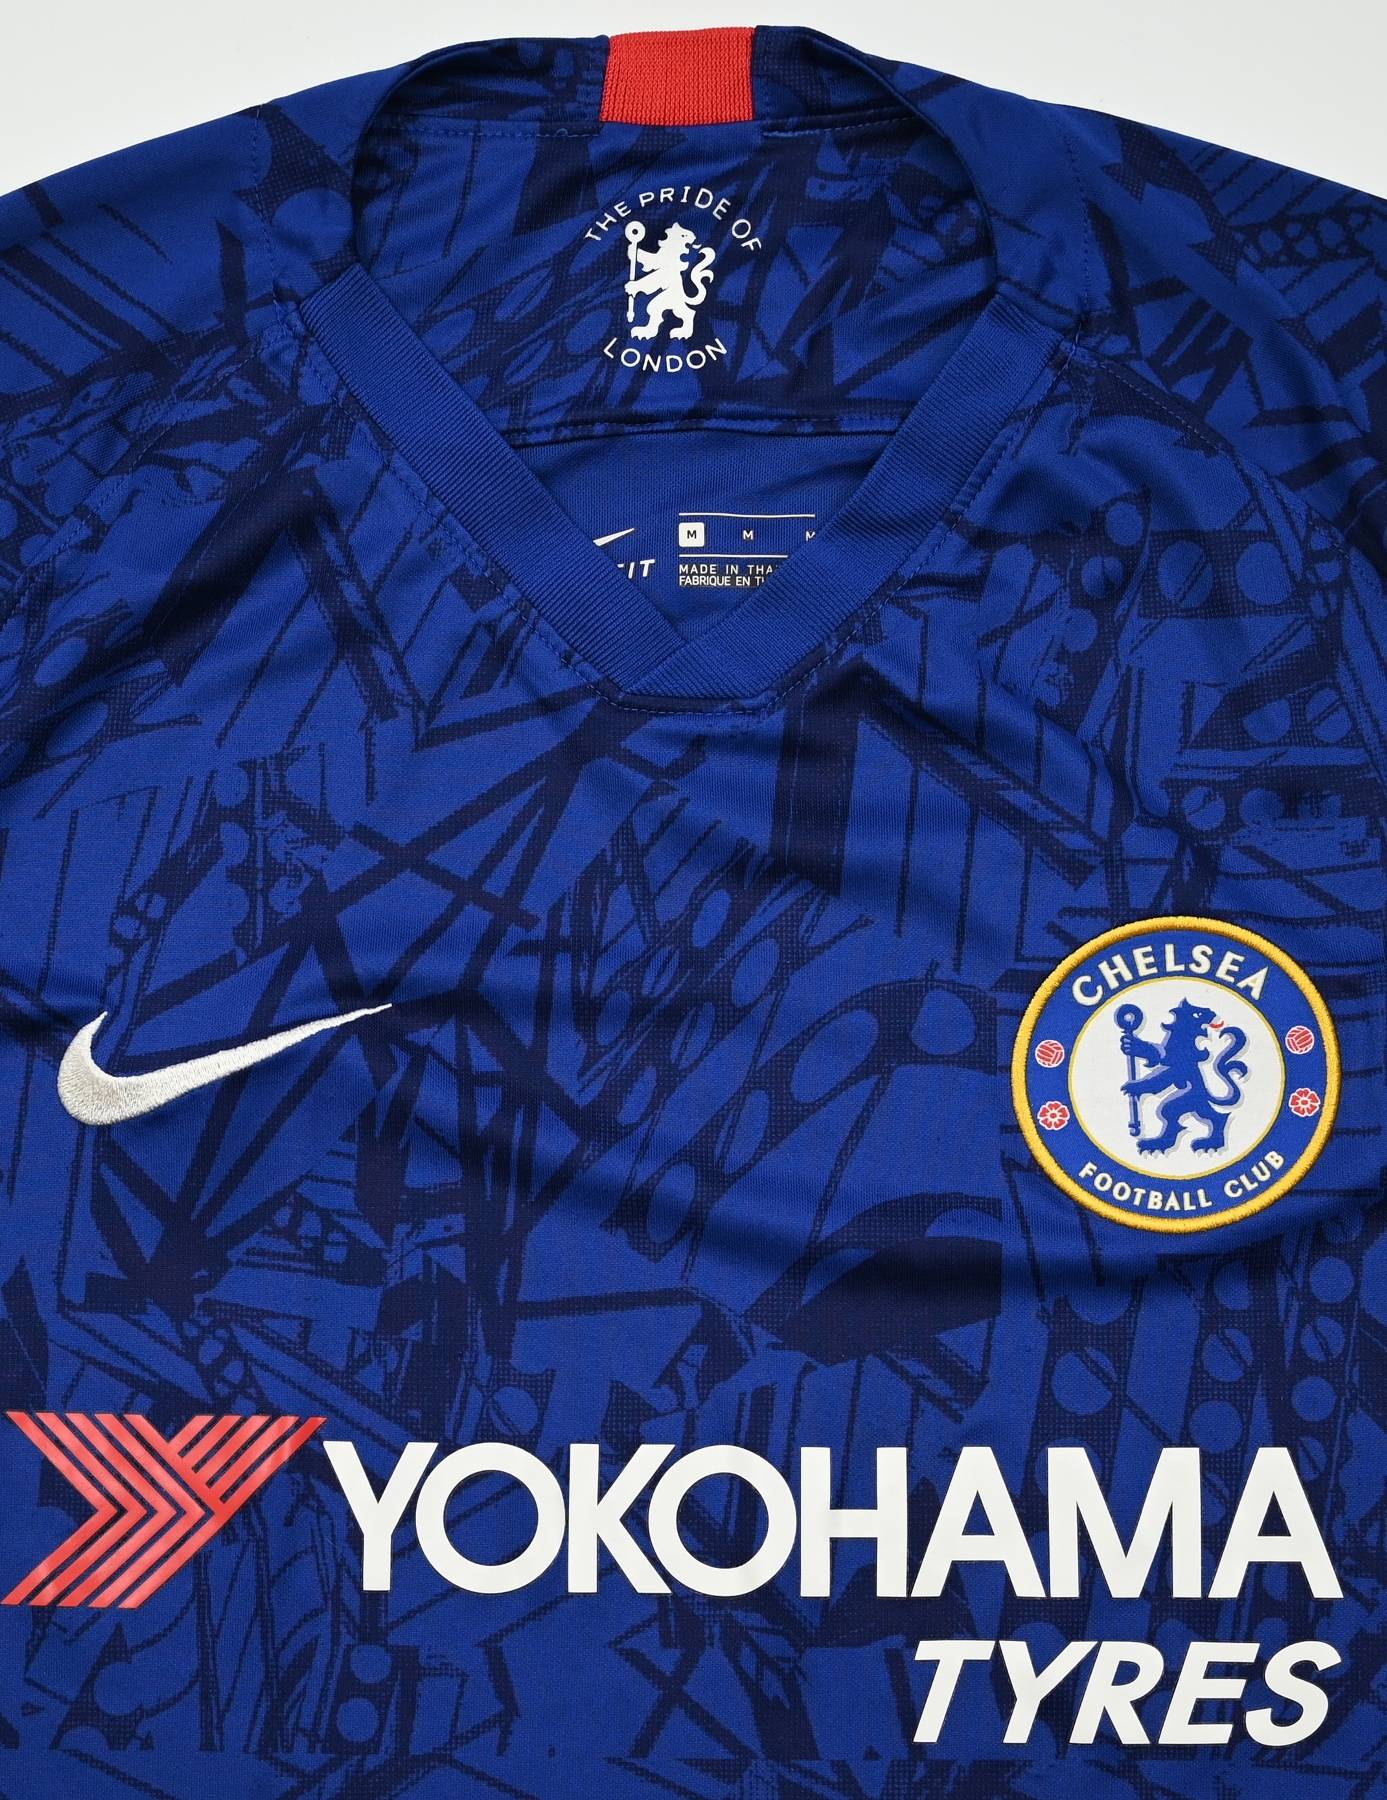 Tisan Designs on X: #RetoRede London FC (Chelsea FC) #London #LondonFC  #Chelsea #ChelseaFC #PES #PES2019 #KONAMI #BLUES #Nike   / X